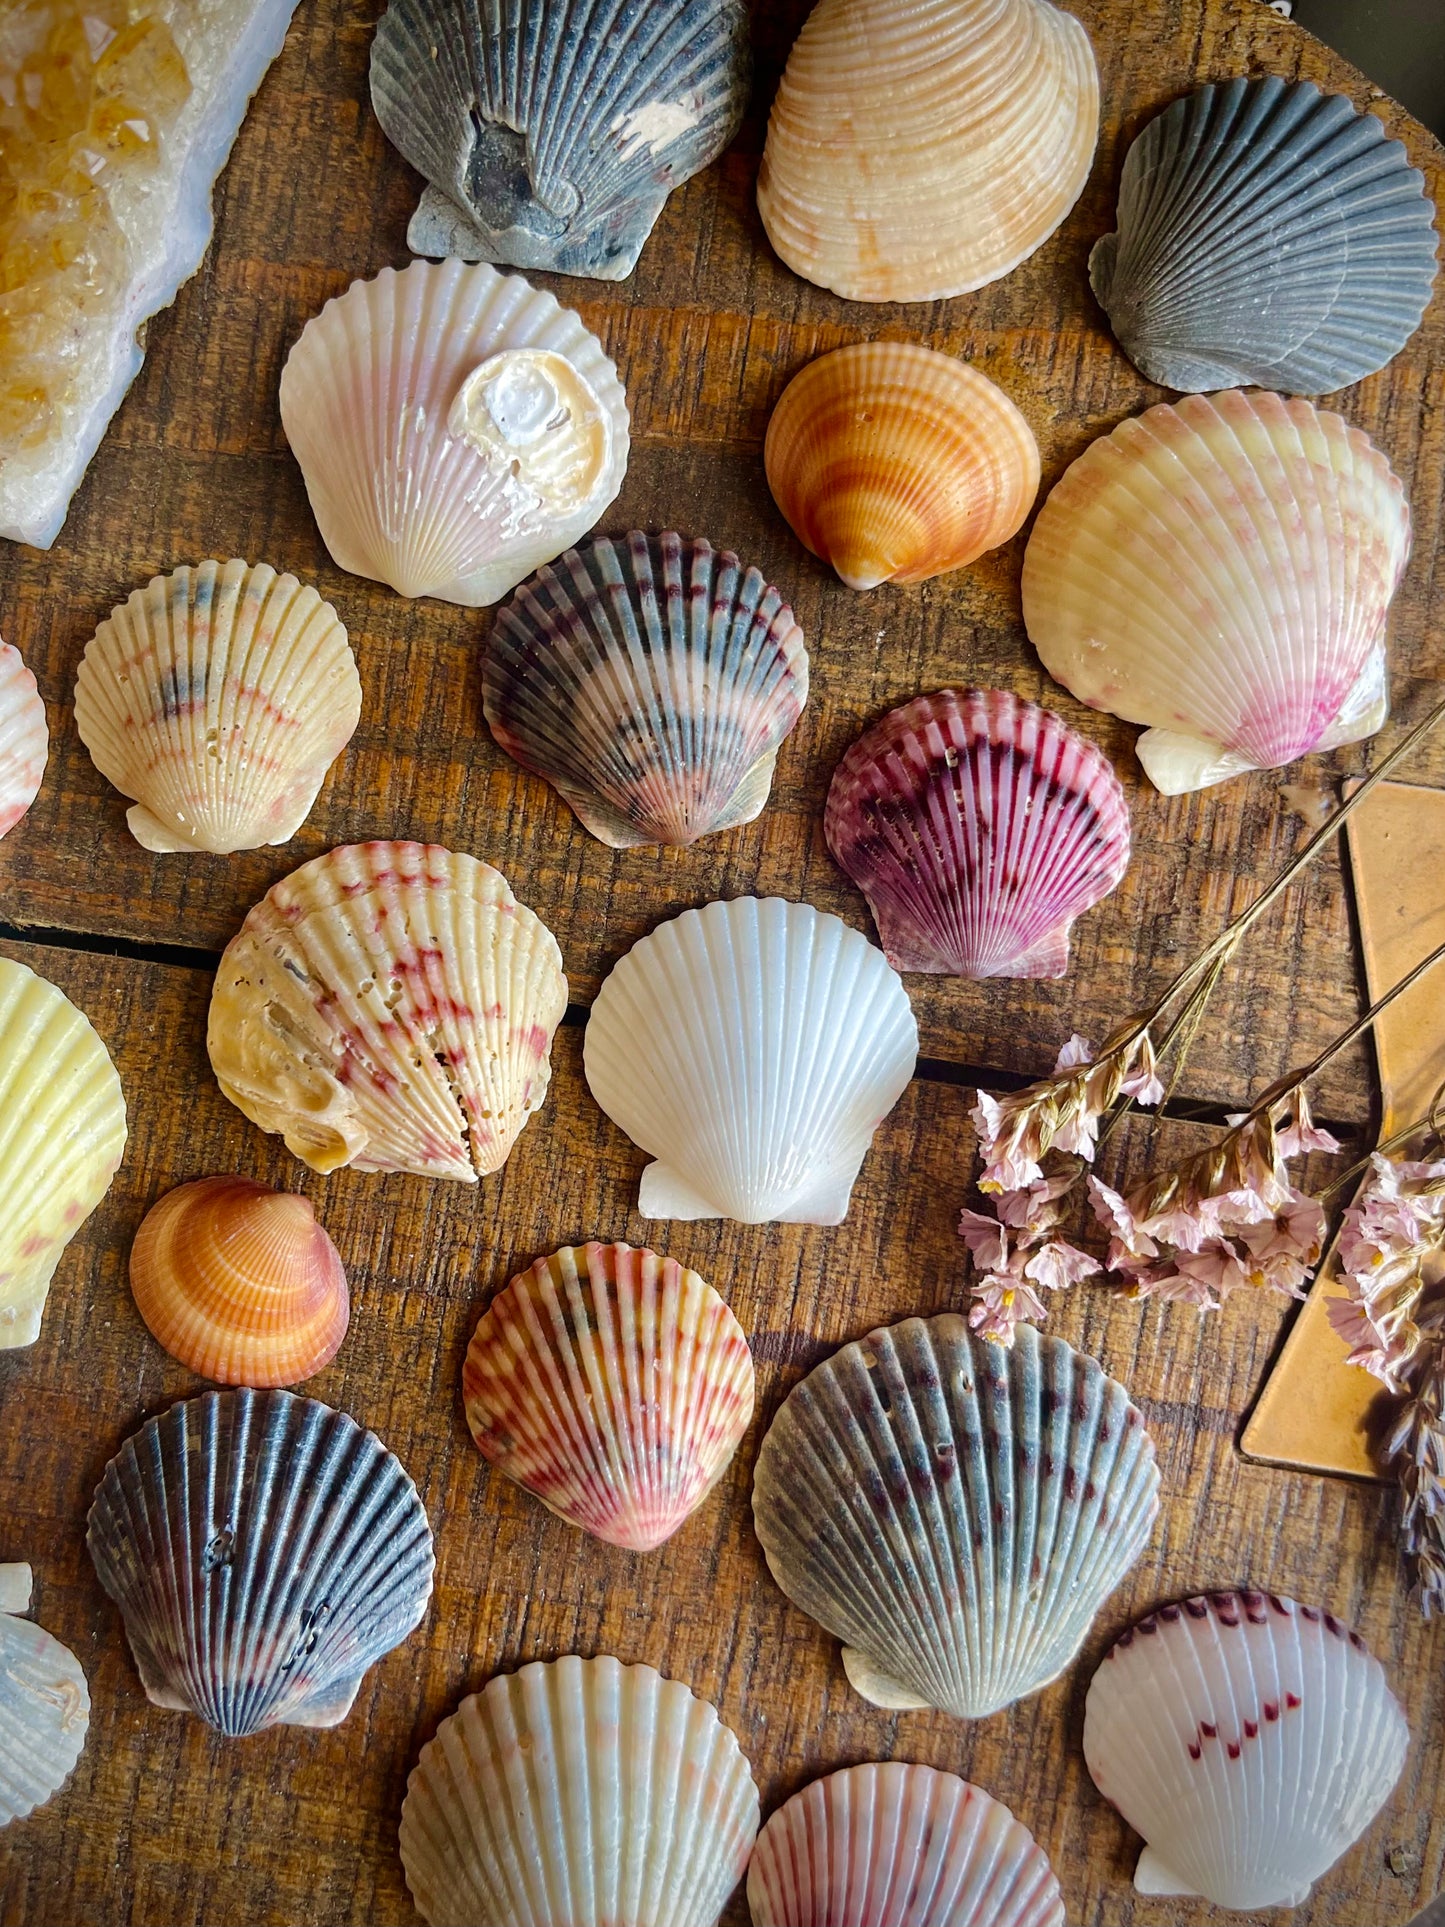 3 extra pretty sea shells